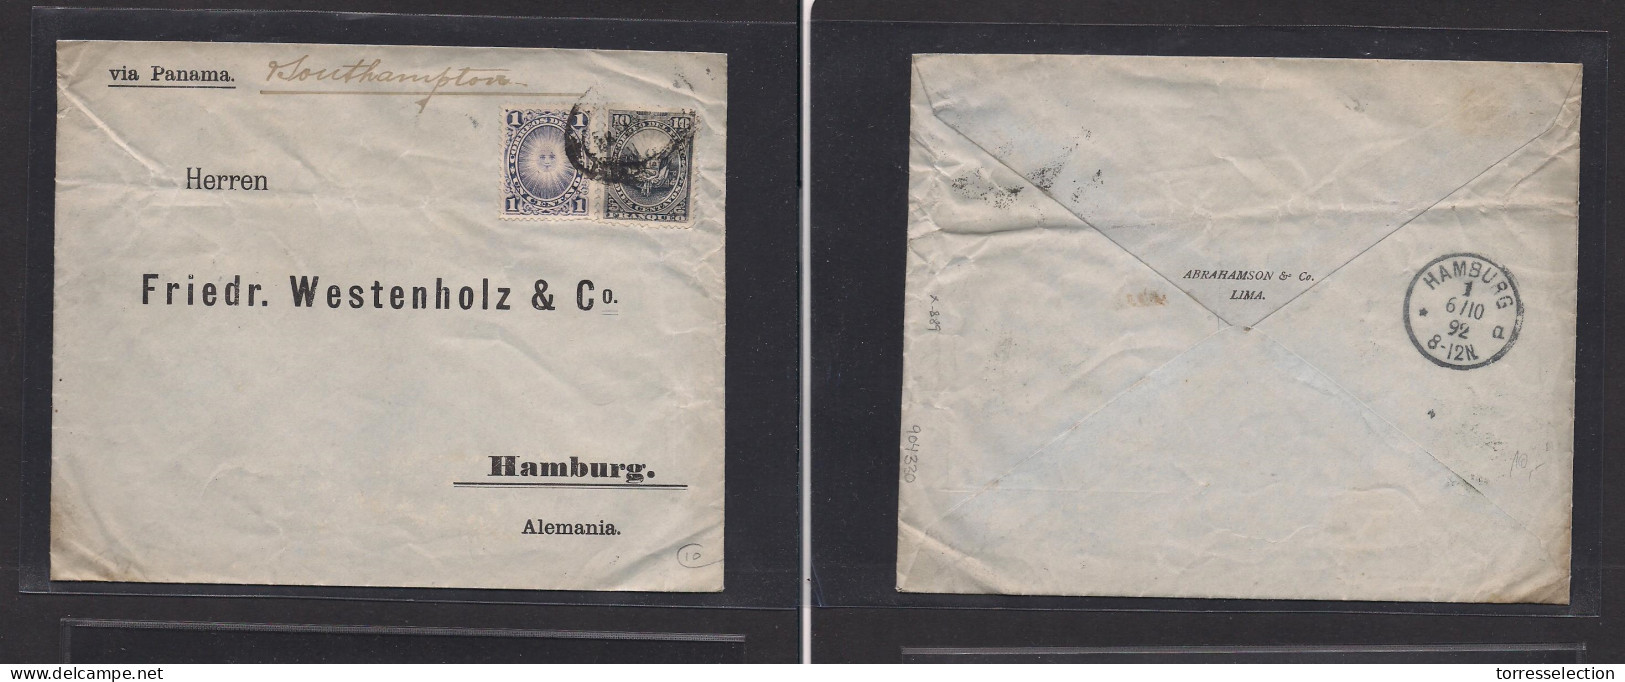 PERU. Peru - Cover - 1892 Lima To Hamburg Germany Fkd Env 11c Rate Via Panama Southampton. Easy Deal. XSALE. - Perù